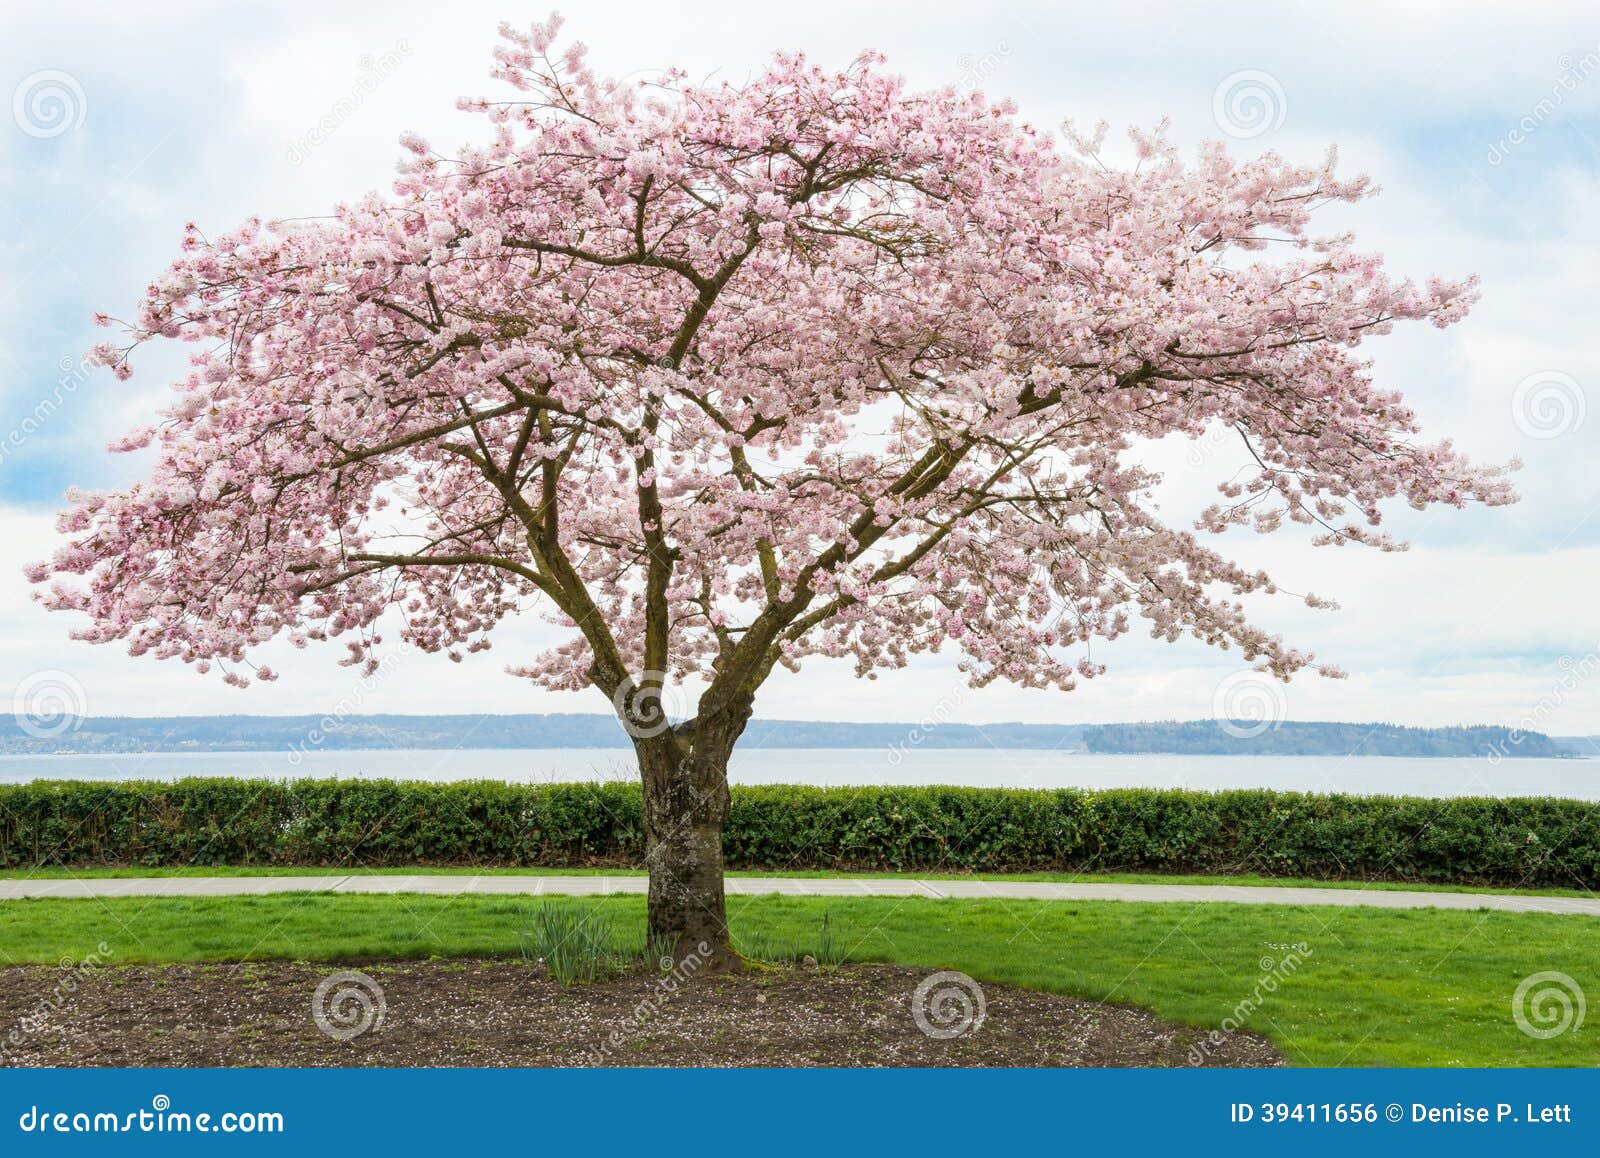 japanese cherry tree in bloom on coast